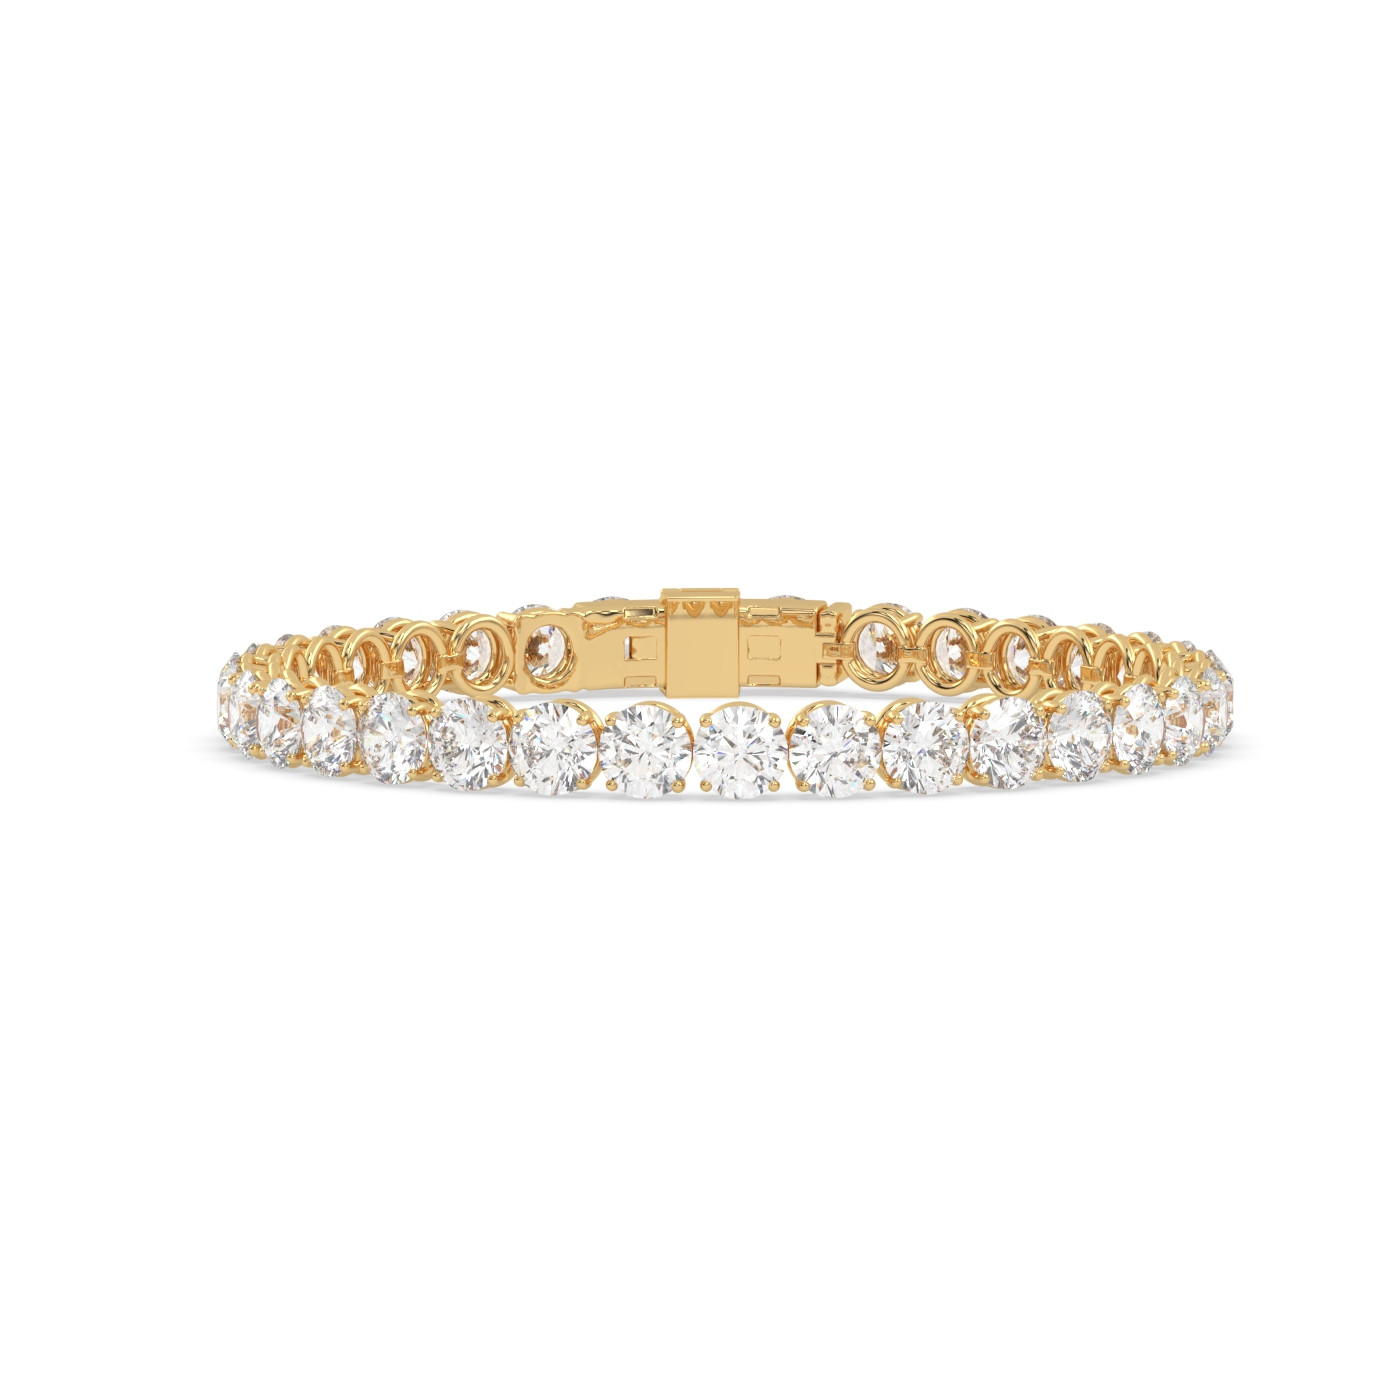 18k yellow gold 4.0 carat round diamond tennis bracelet with modern american lock system Photos & images